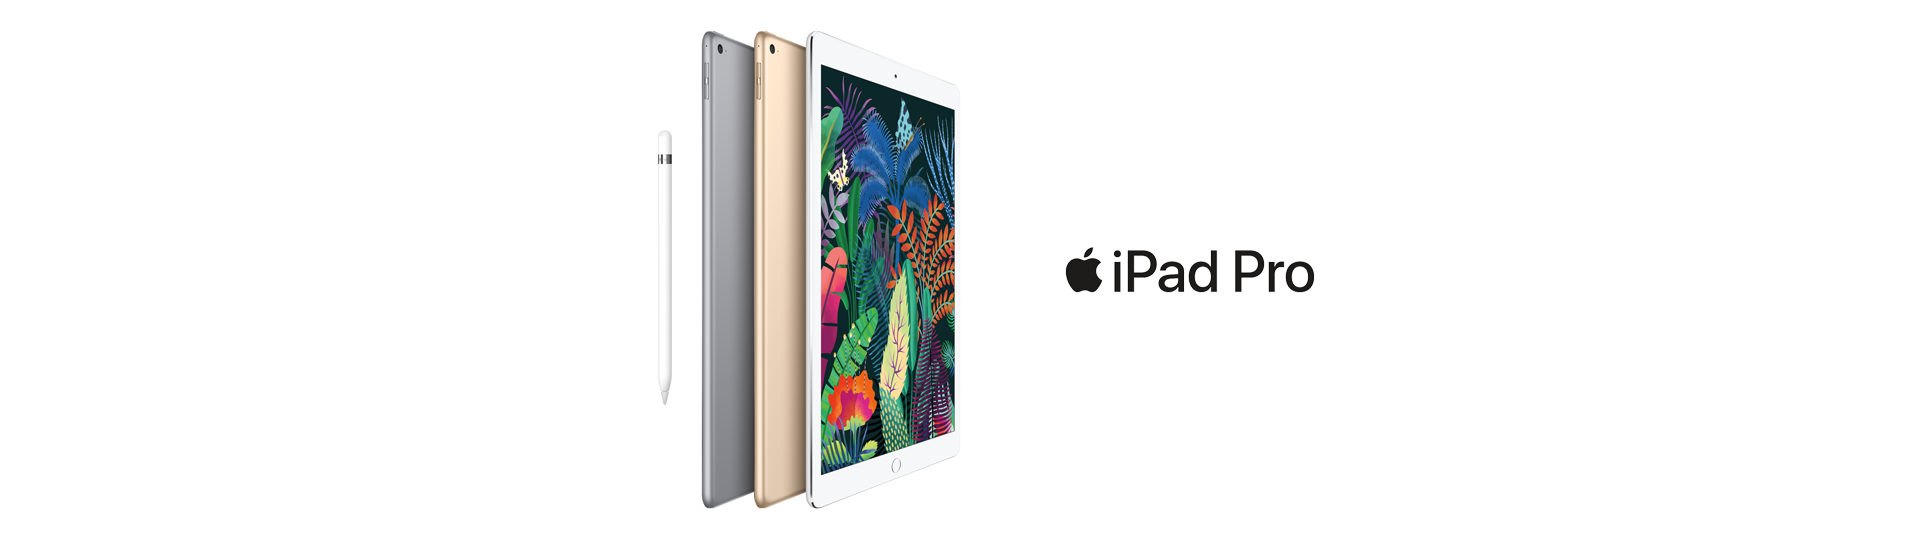 iPad Pro 12.9 Wifi-Chip M1 - Mundomac